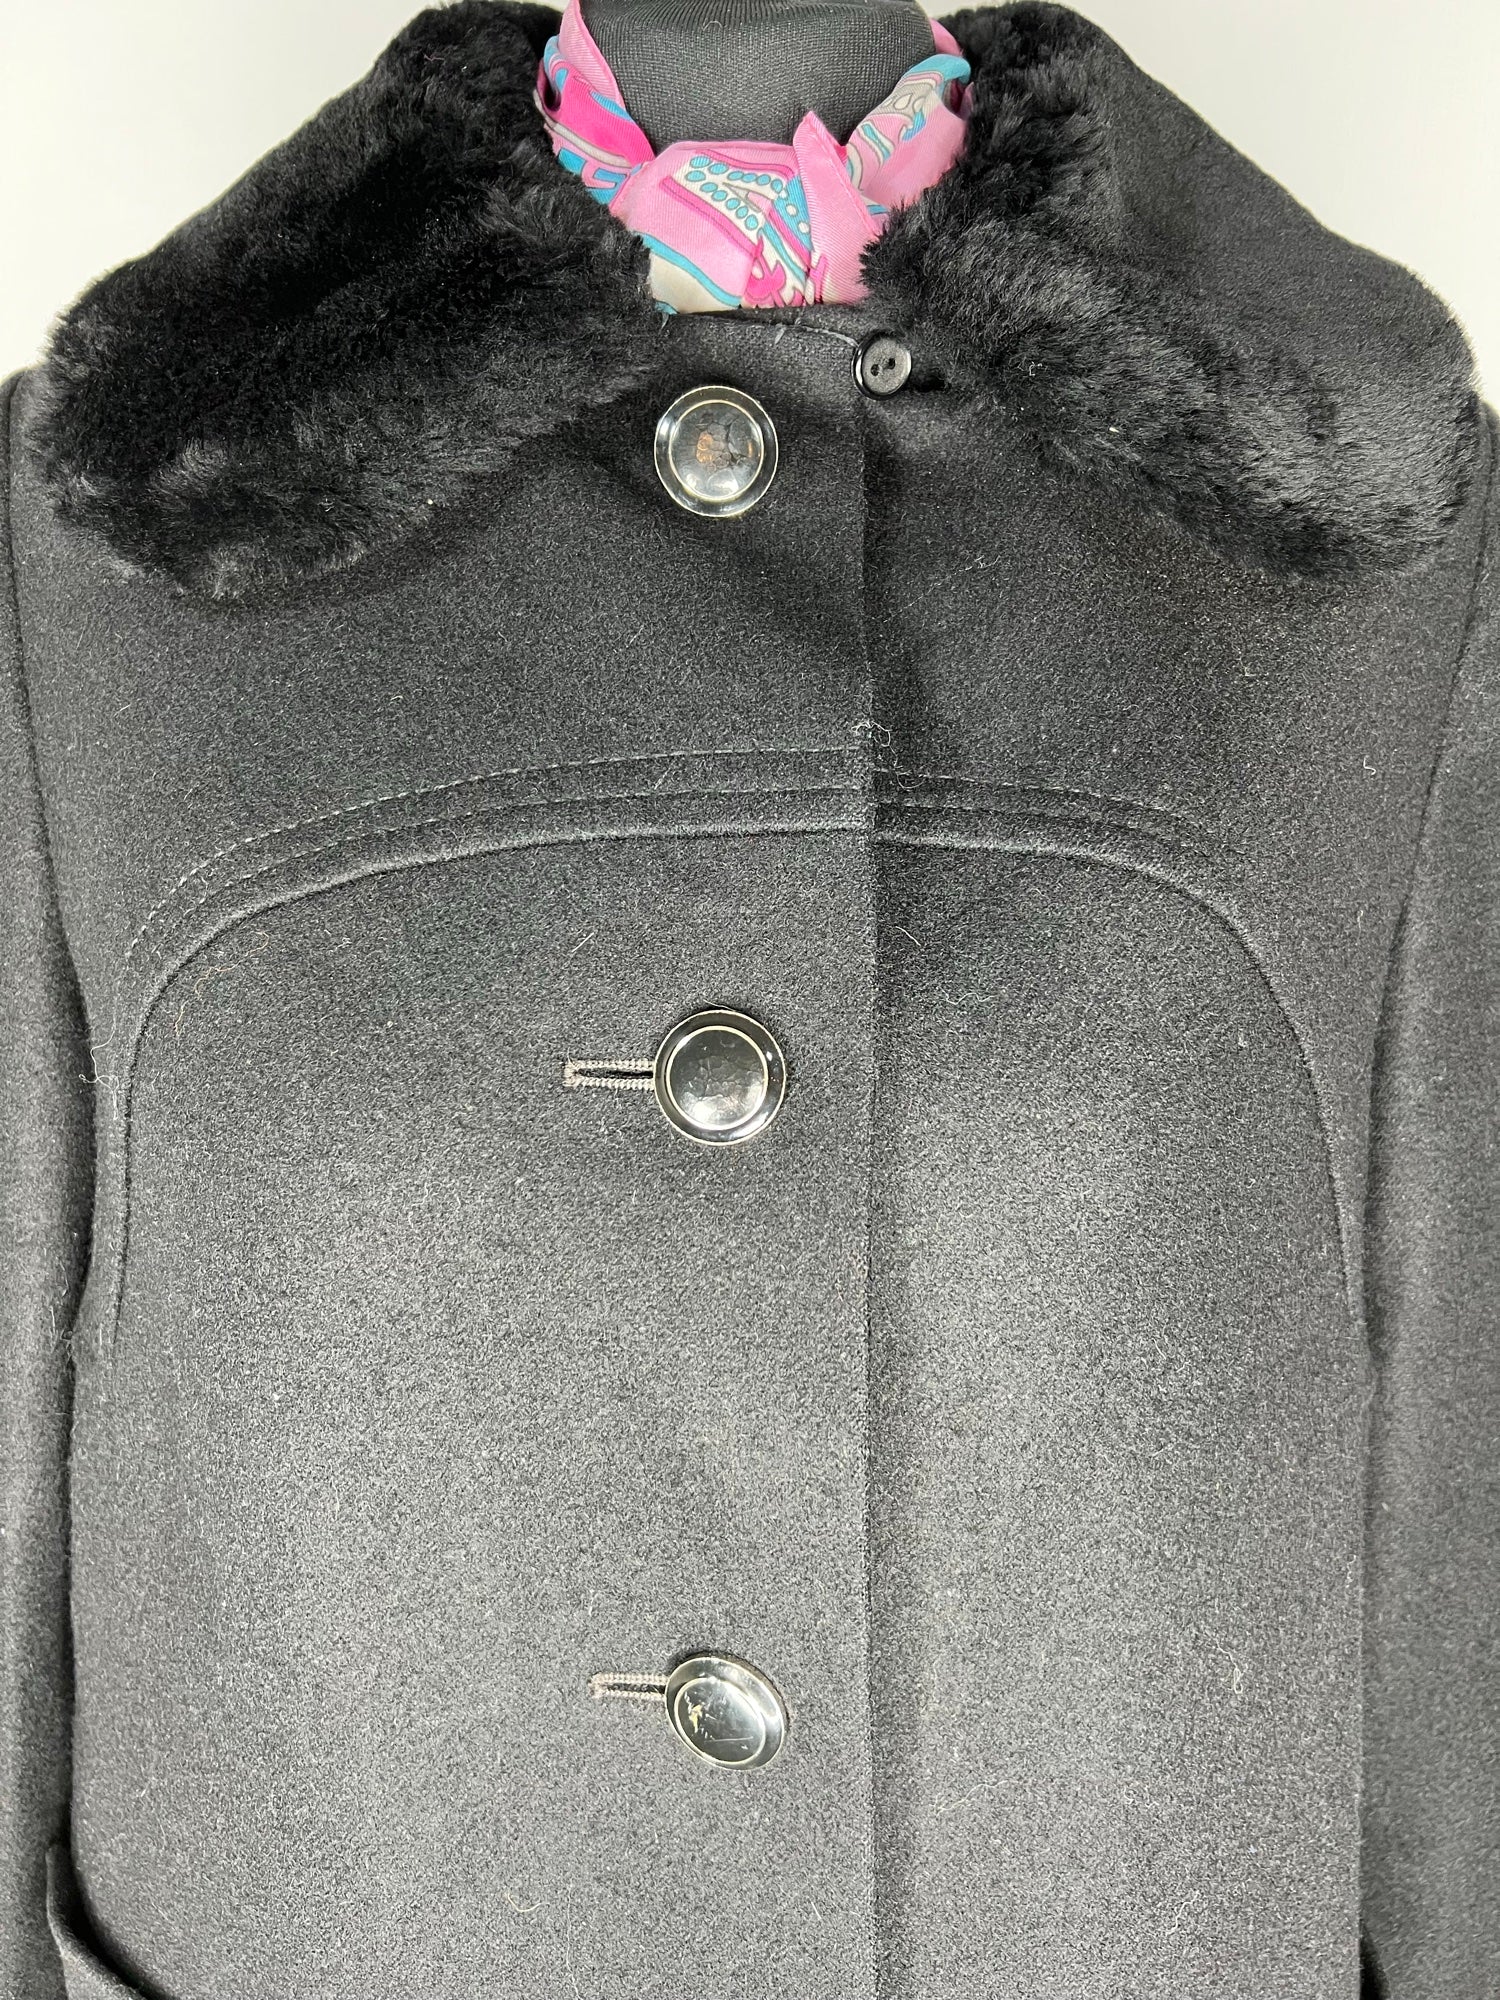 womens jacket  womens coat  womens  Winter Coat  Windsmoor  vintage  Urban Village Vintage  urban village  sheepskin collar  Jacket  coat  button  black  60s  1960s  14